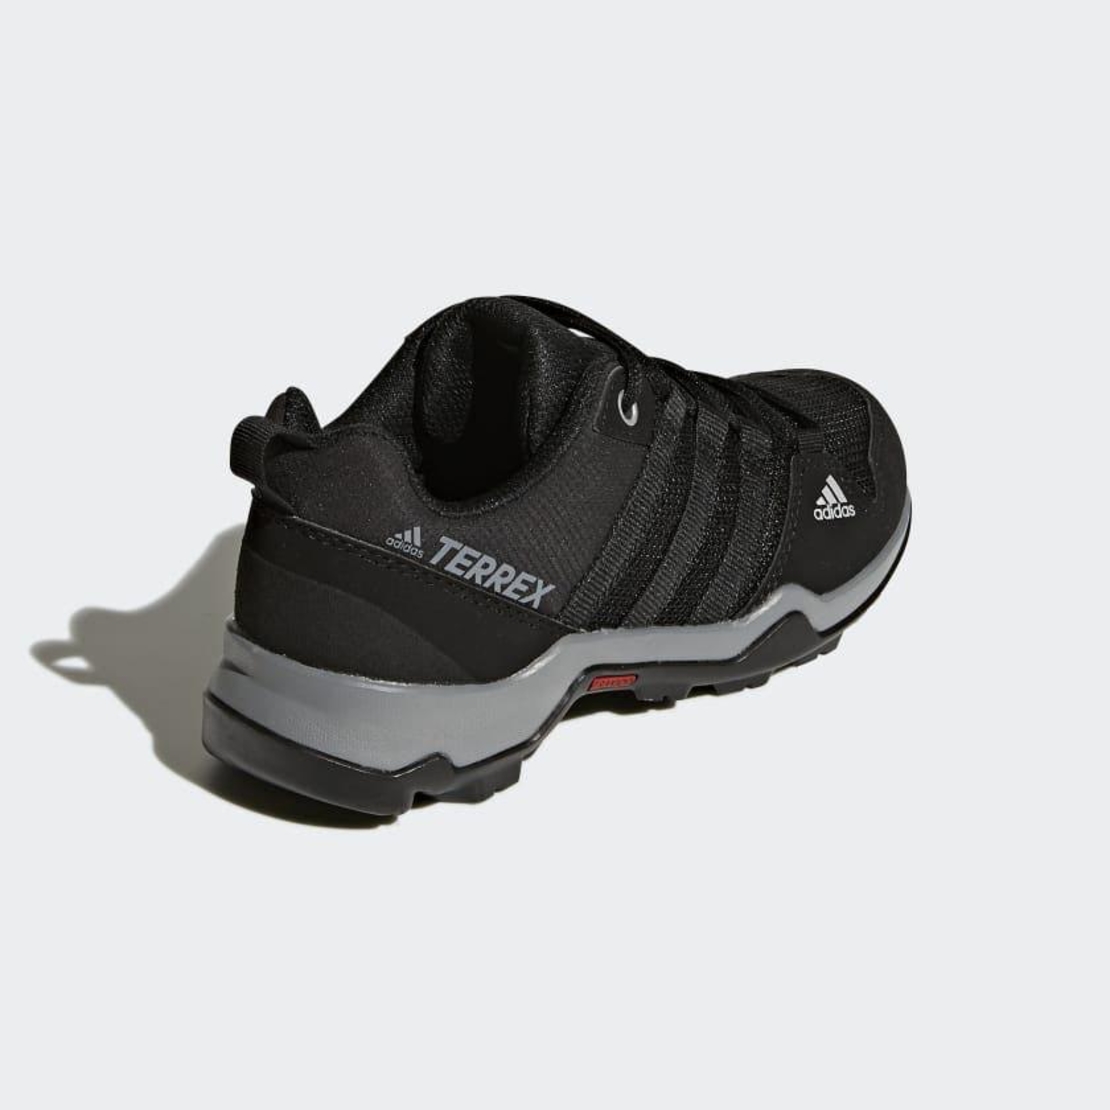 נעלי אדידס לנוער ונשים | Adidas Terrex Ax2r